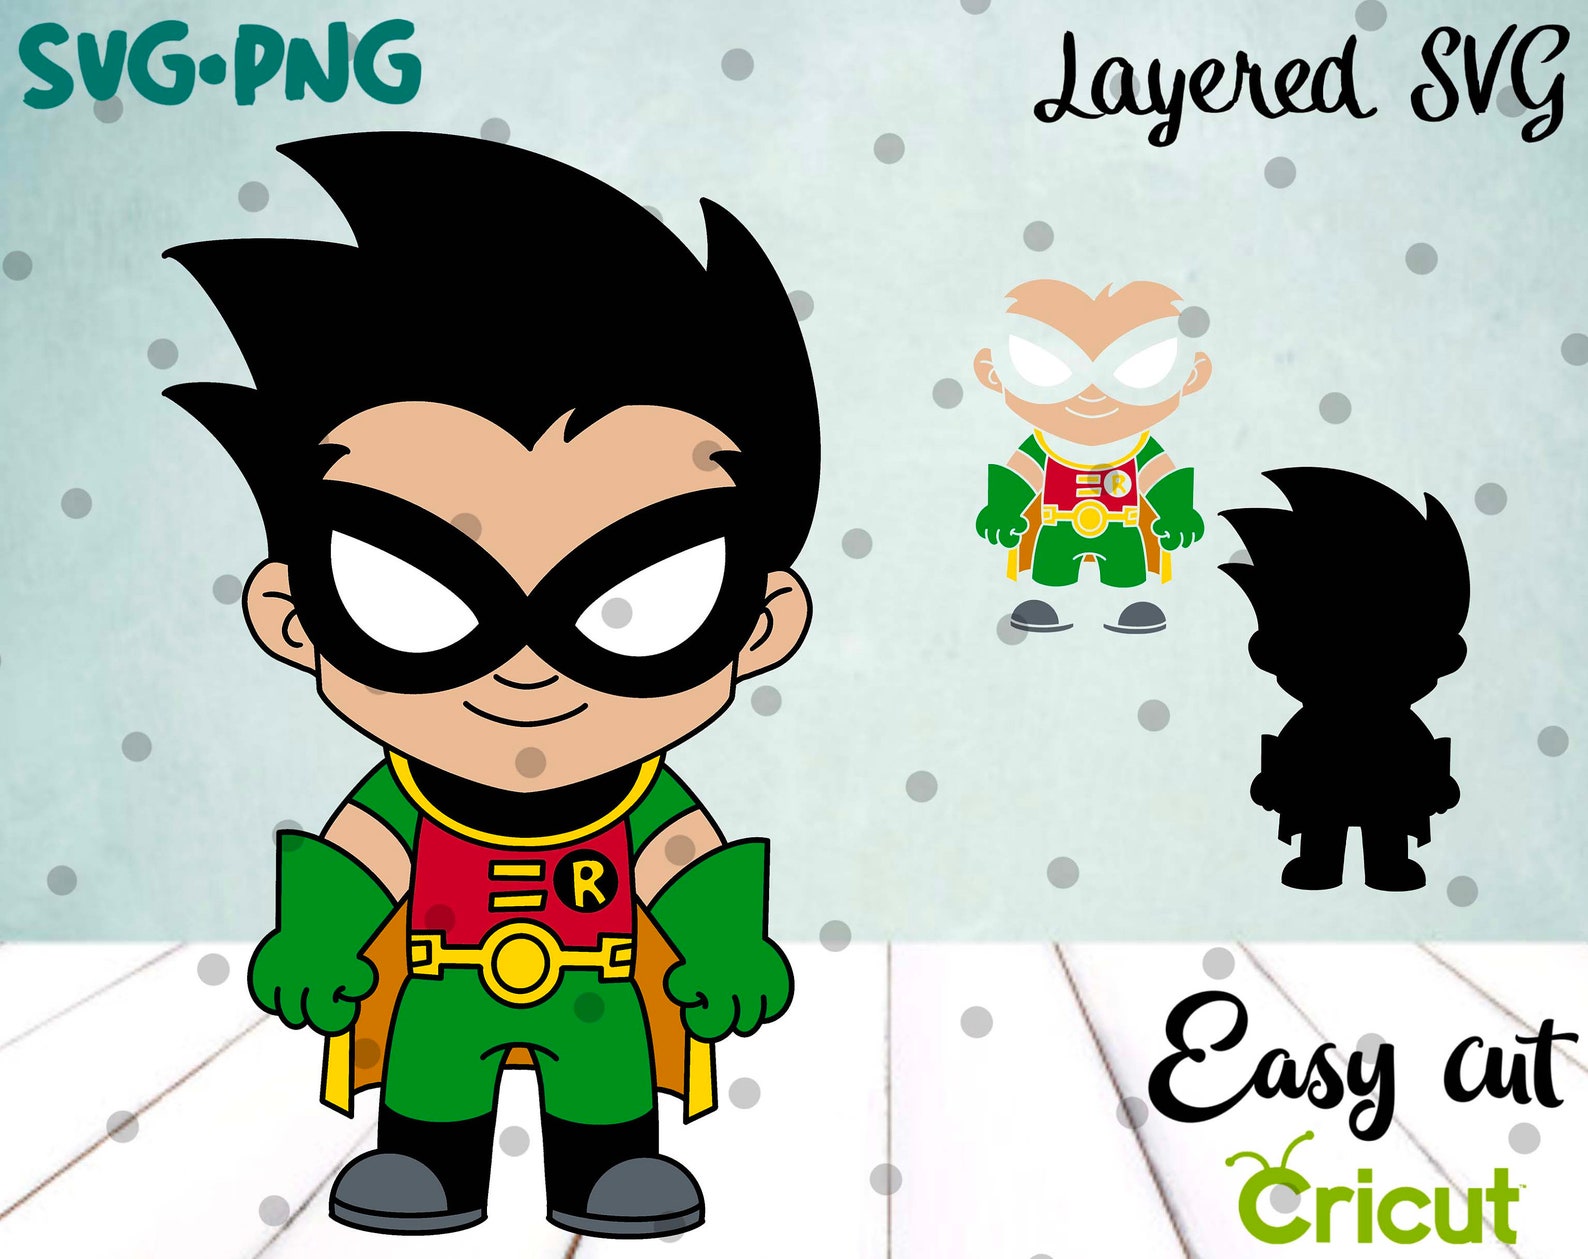 Chibi Superhero SVG Layered Cut File Easy Cut Cricut | Etsy